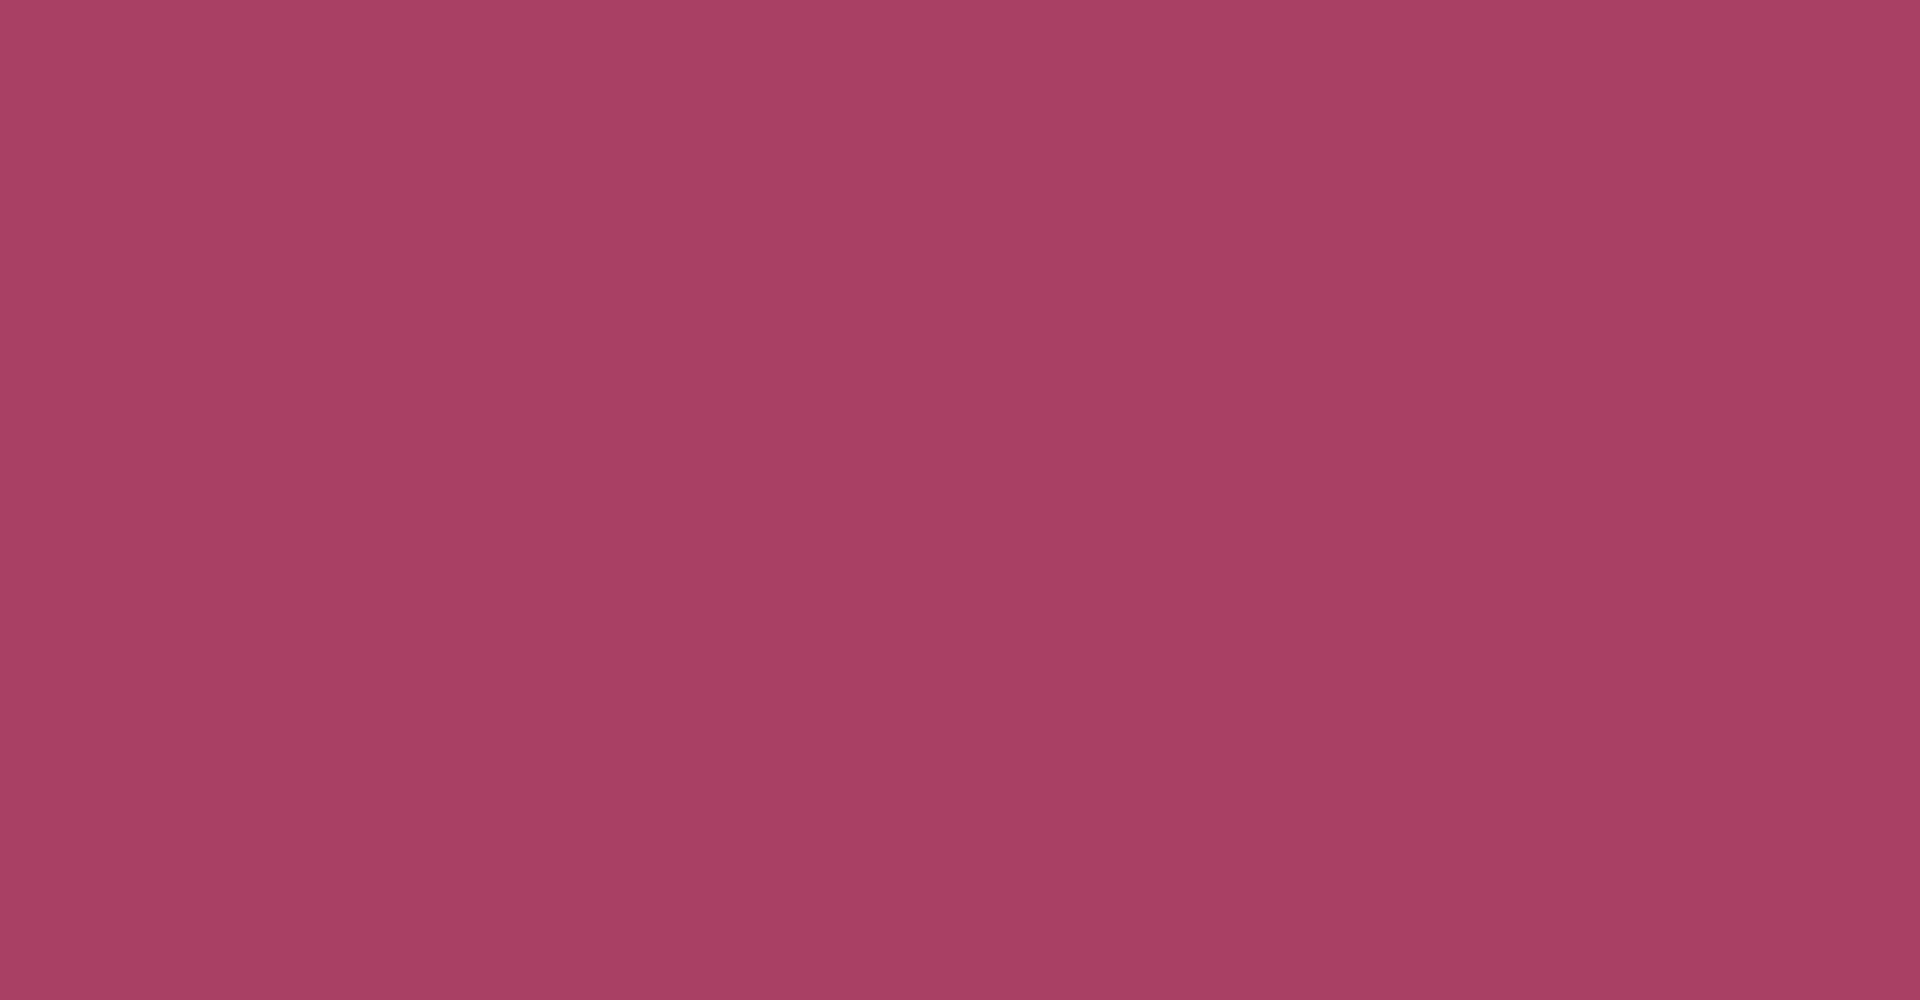 Tints of Light Pink #FFB6C1 hex color  Hex color palette, Color palette  pink, Hex colors